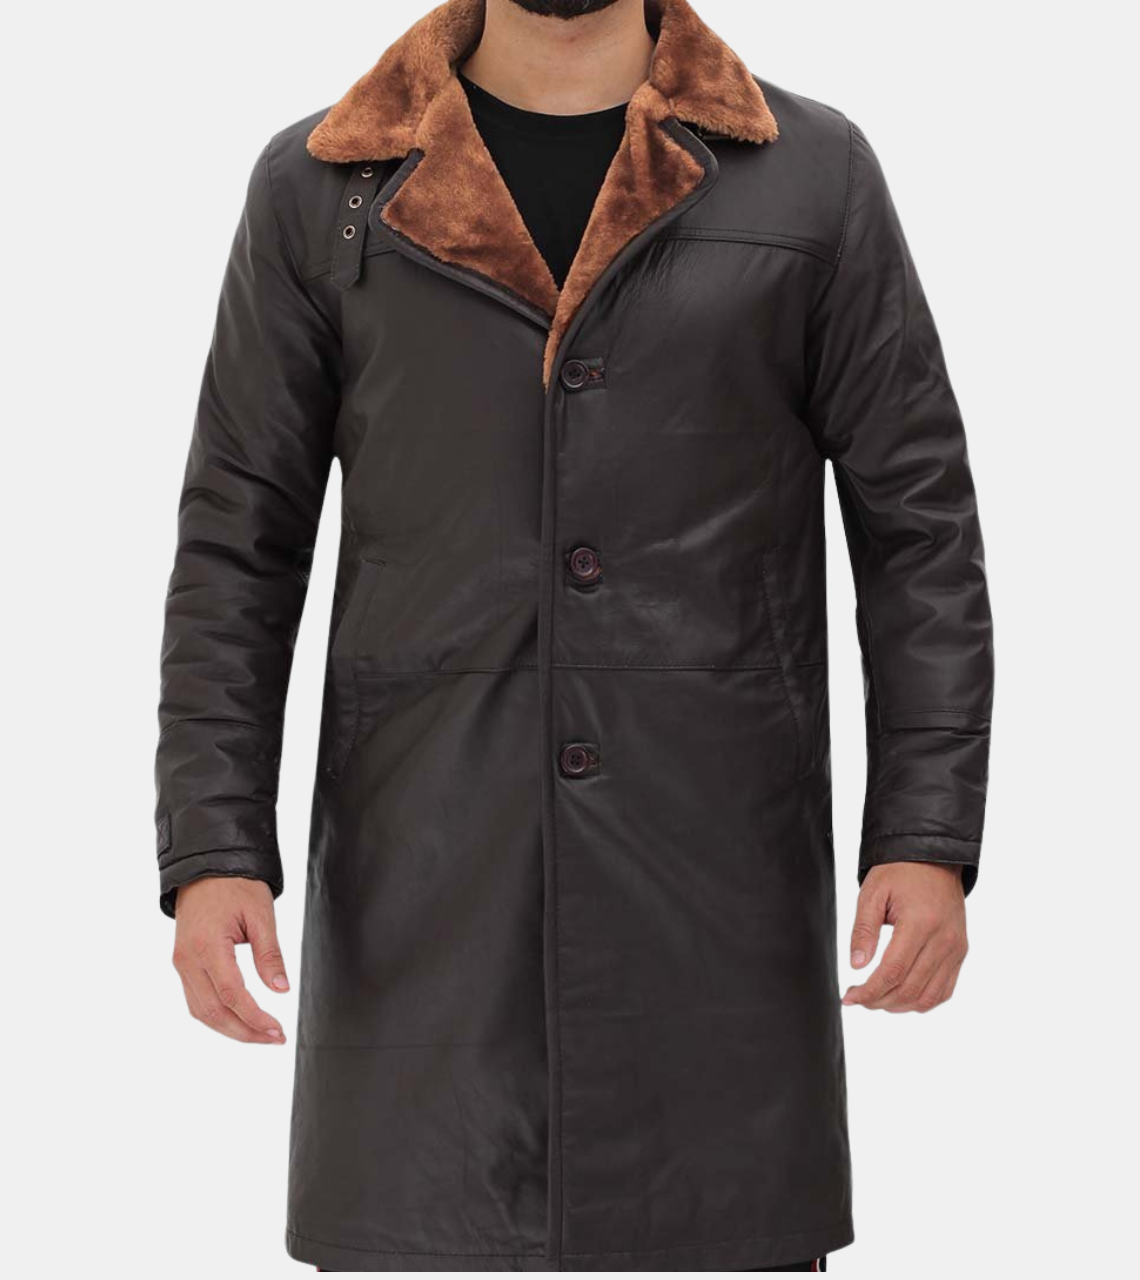  Men's Brown Shearling Leather Coat 